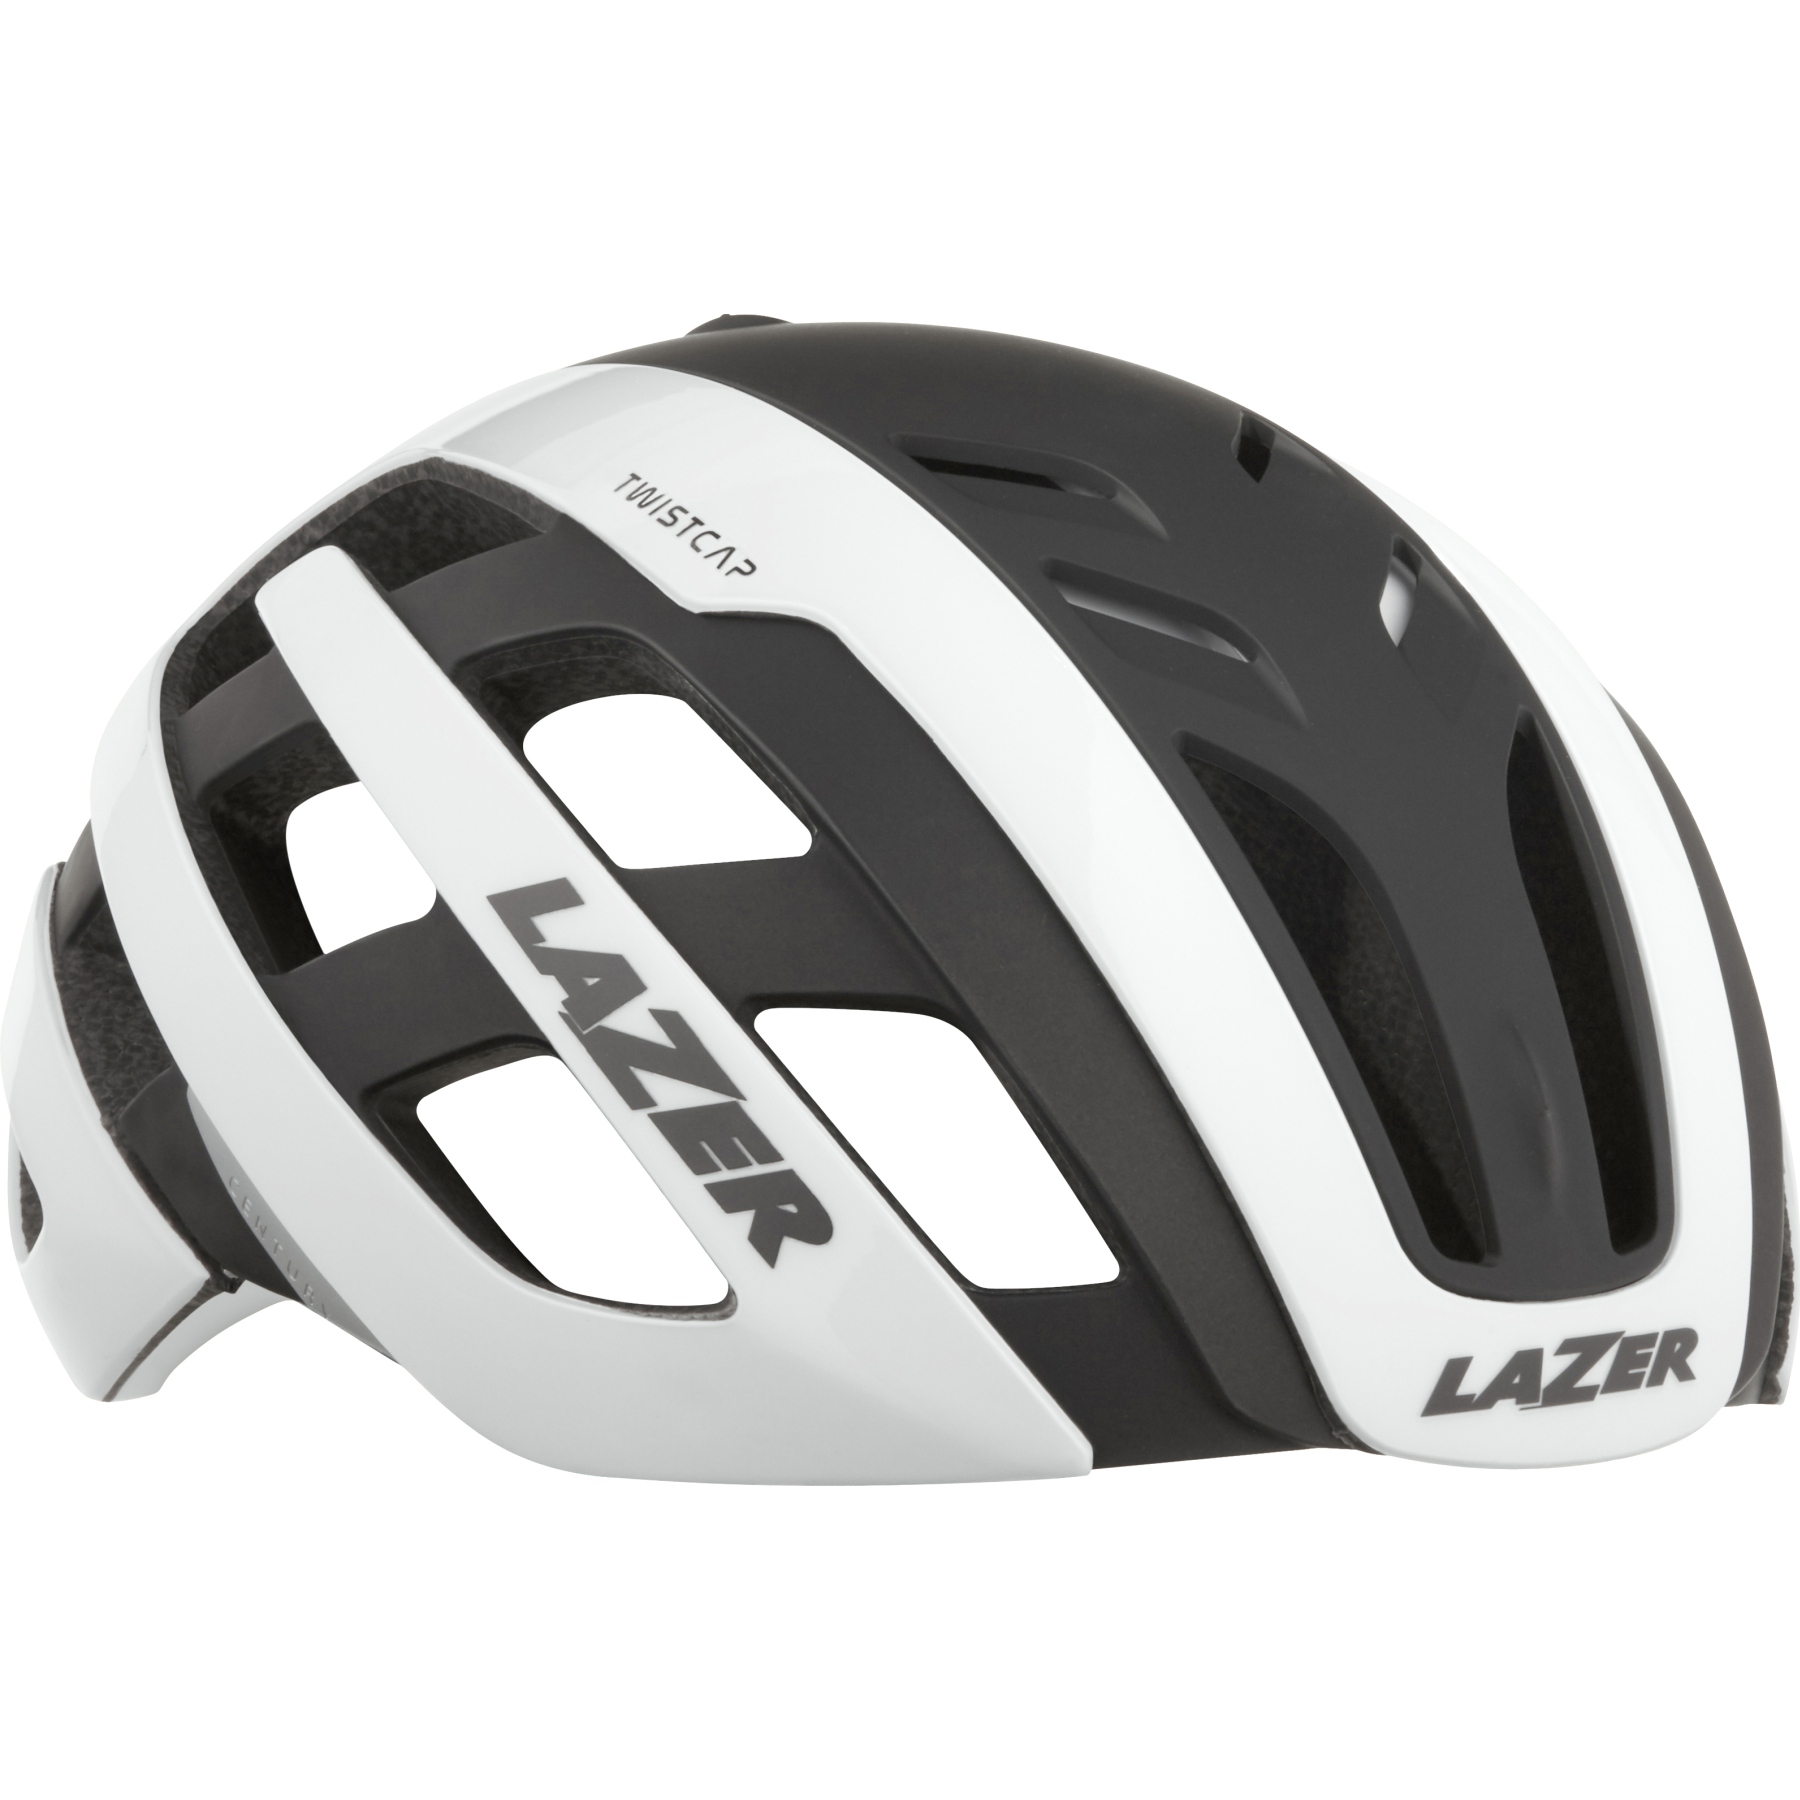 Picture of Lazer Century Bike Helmet - white black